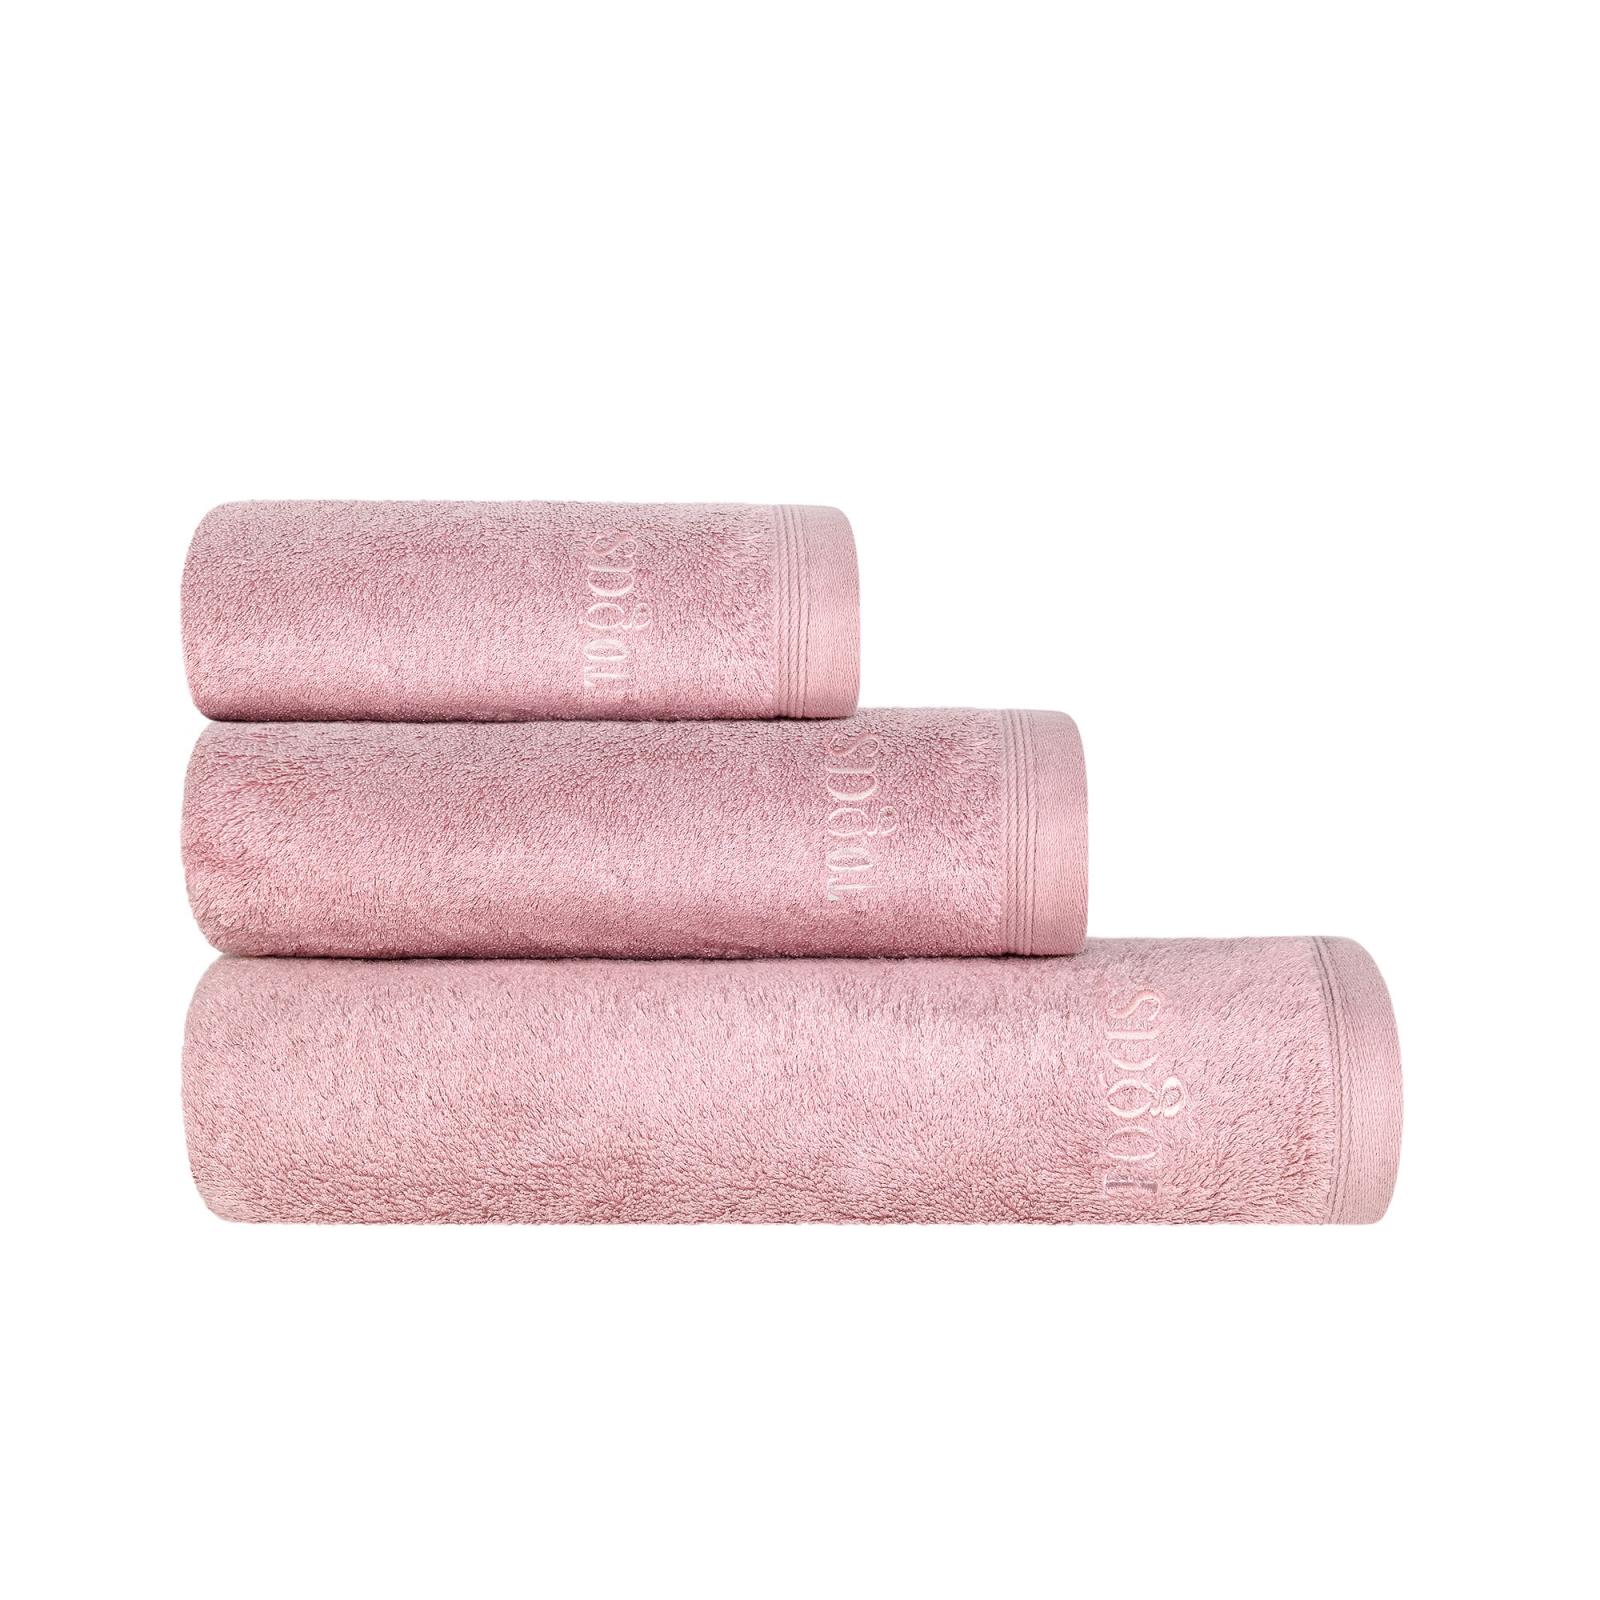 Полотенце Togas Пуатье розовое 70х140 см (10.00.01.1046) полотенце togas аркадия белый 70х140